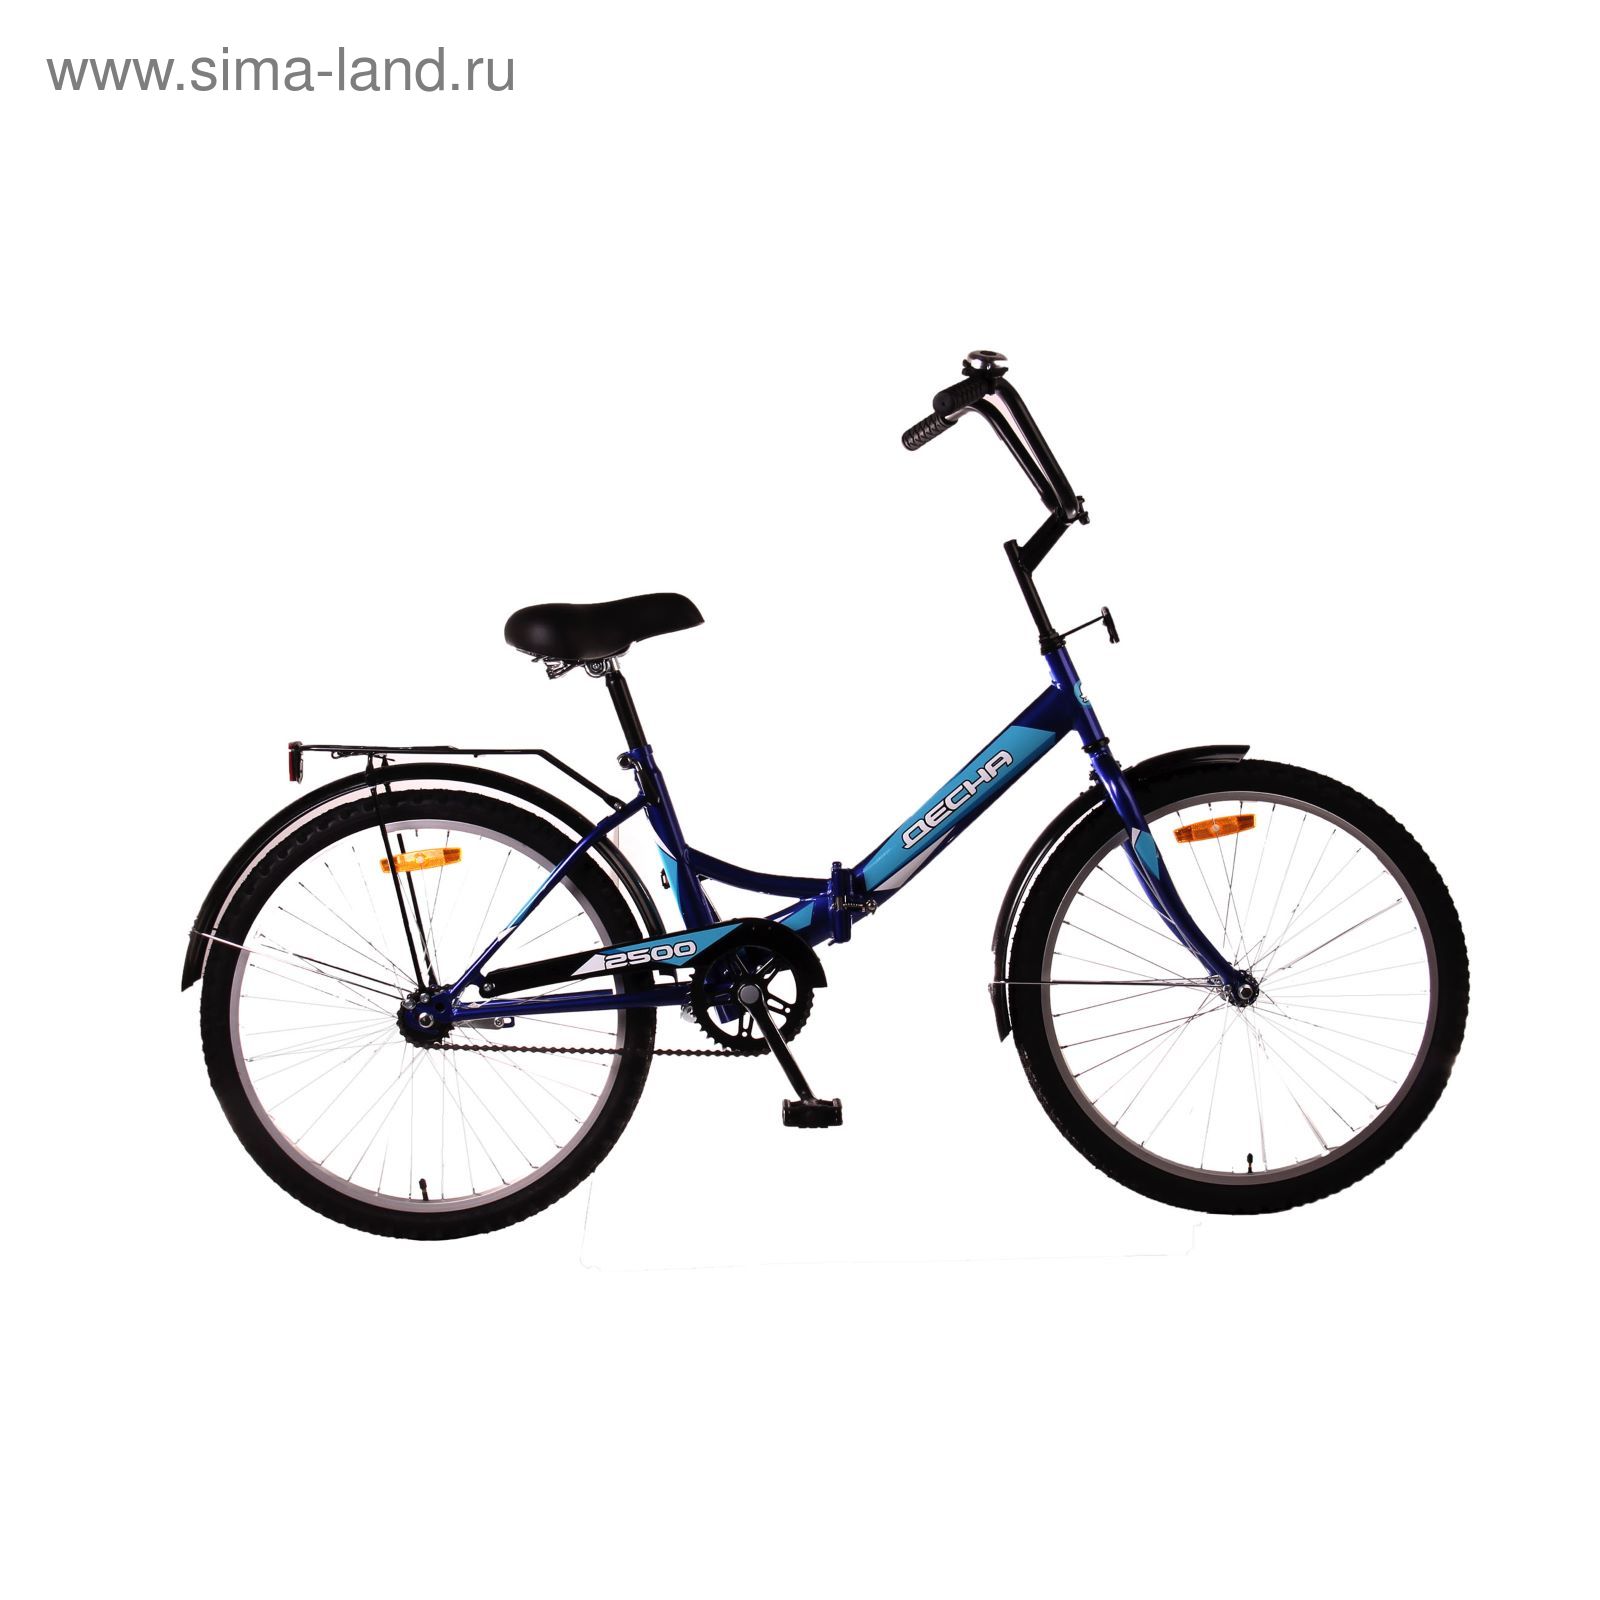 Велосипед 24" Десна-2500 Z010, 2017, цвет синий, размер 14"